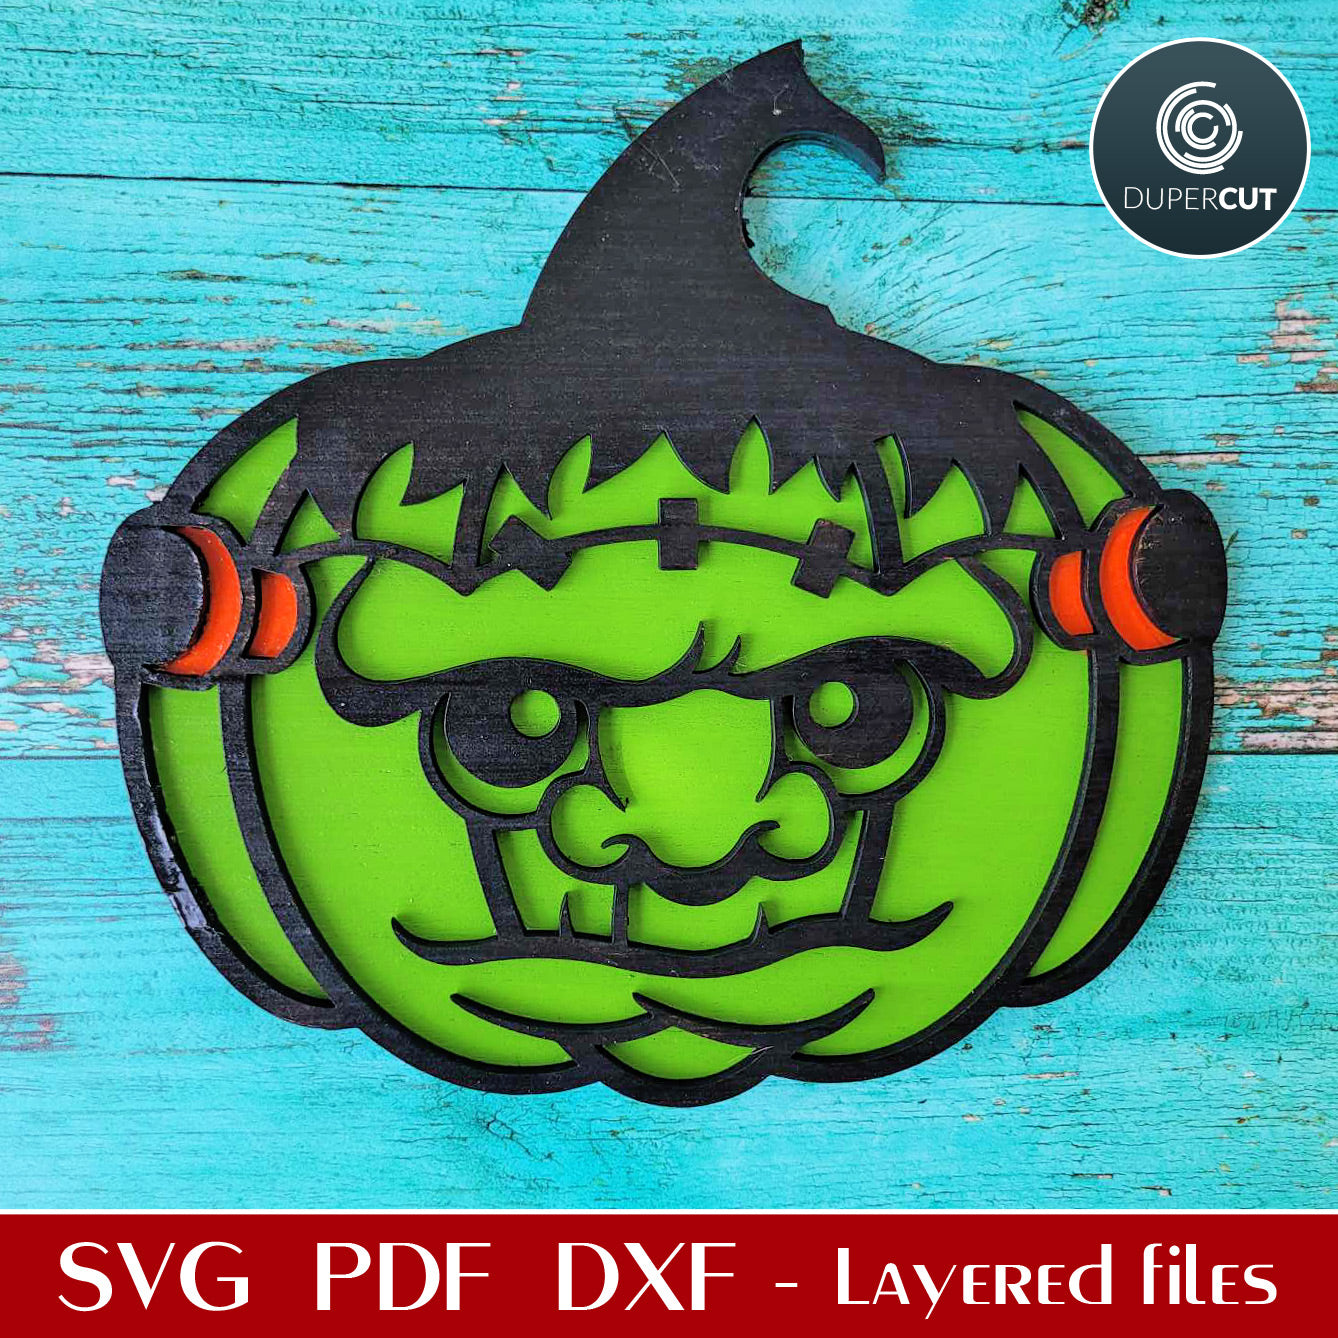 Frankenstein face pumpkin Halloween decoration - SVG DXF layered laser cutting files for Cricut, Glowforge, X-tool, CNC plasma machines by DuperCut